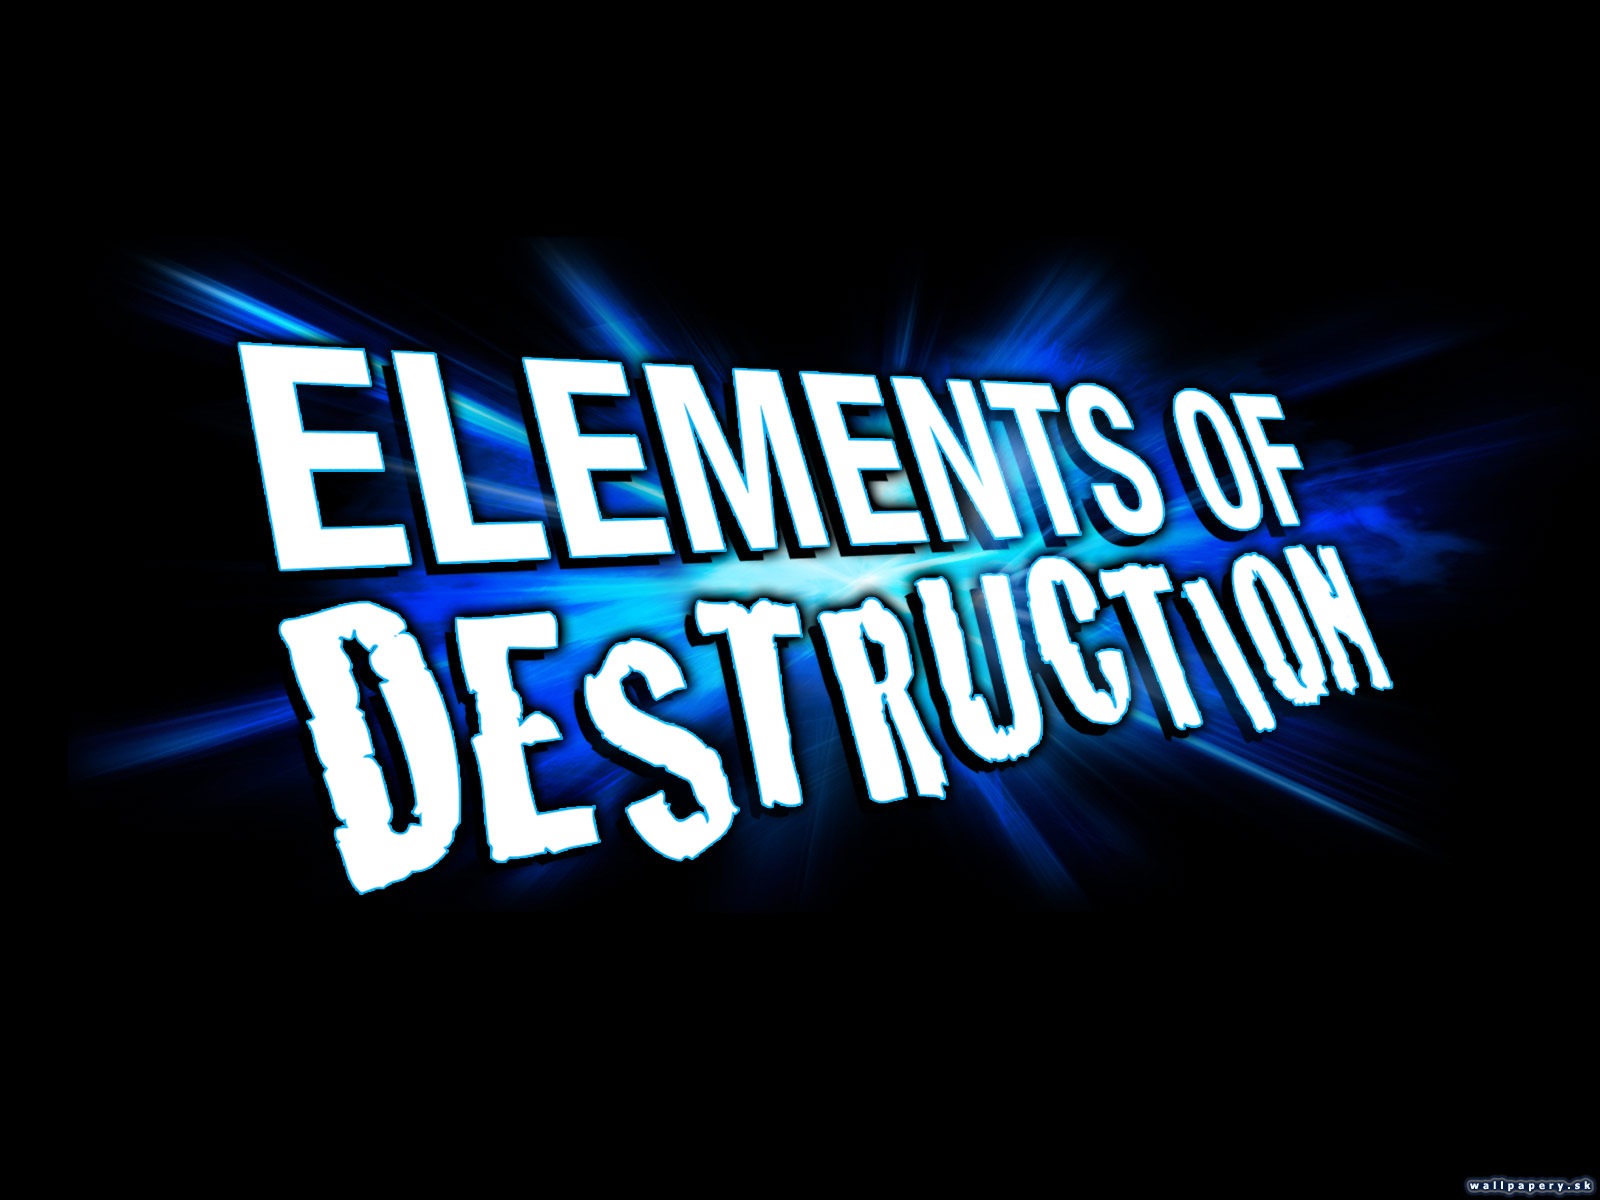 Elements of Destruction - wallpaper 1